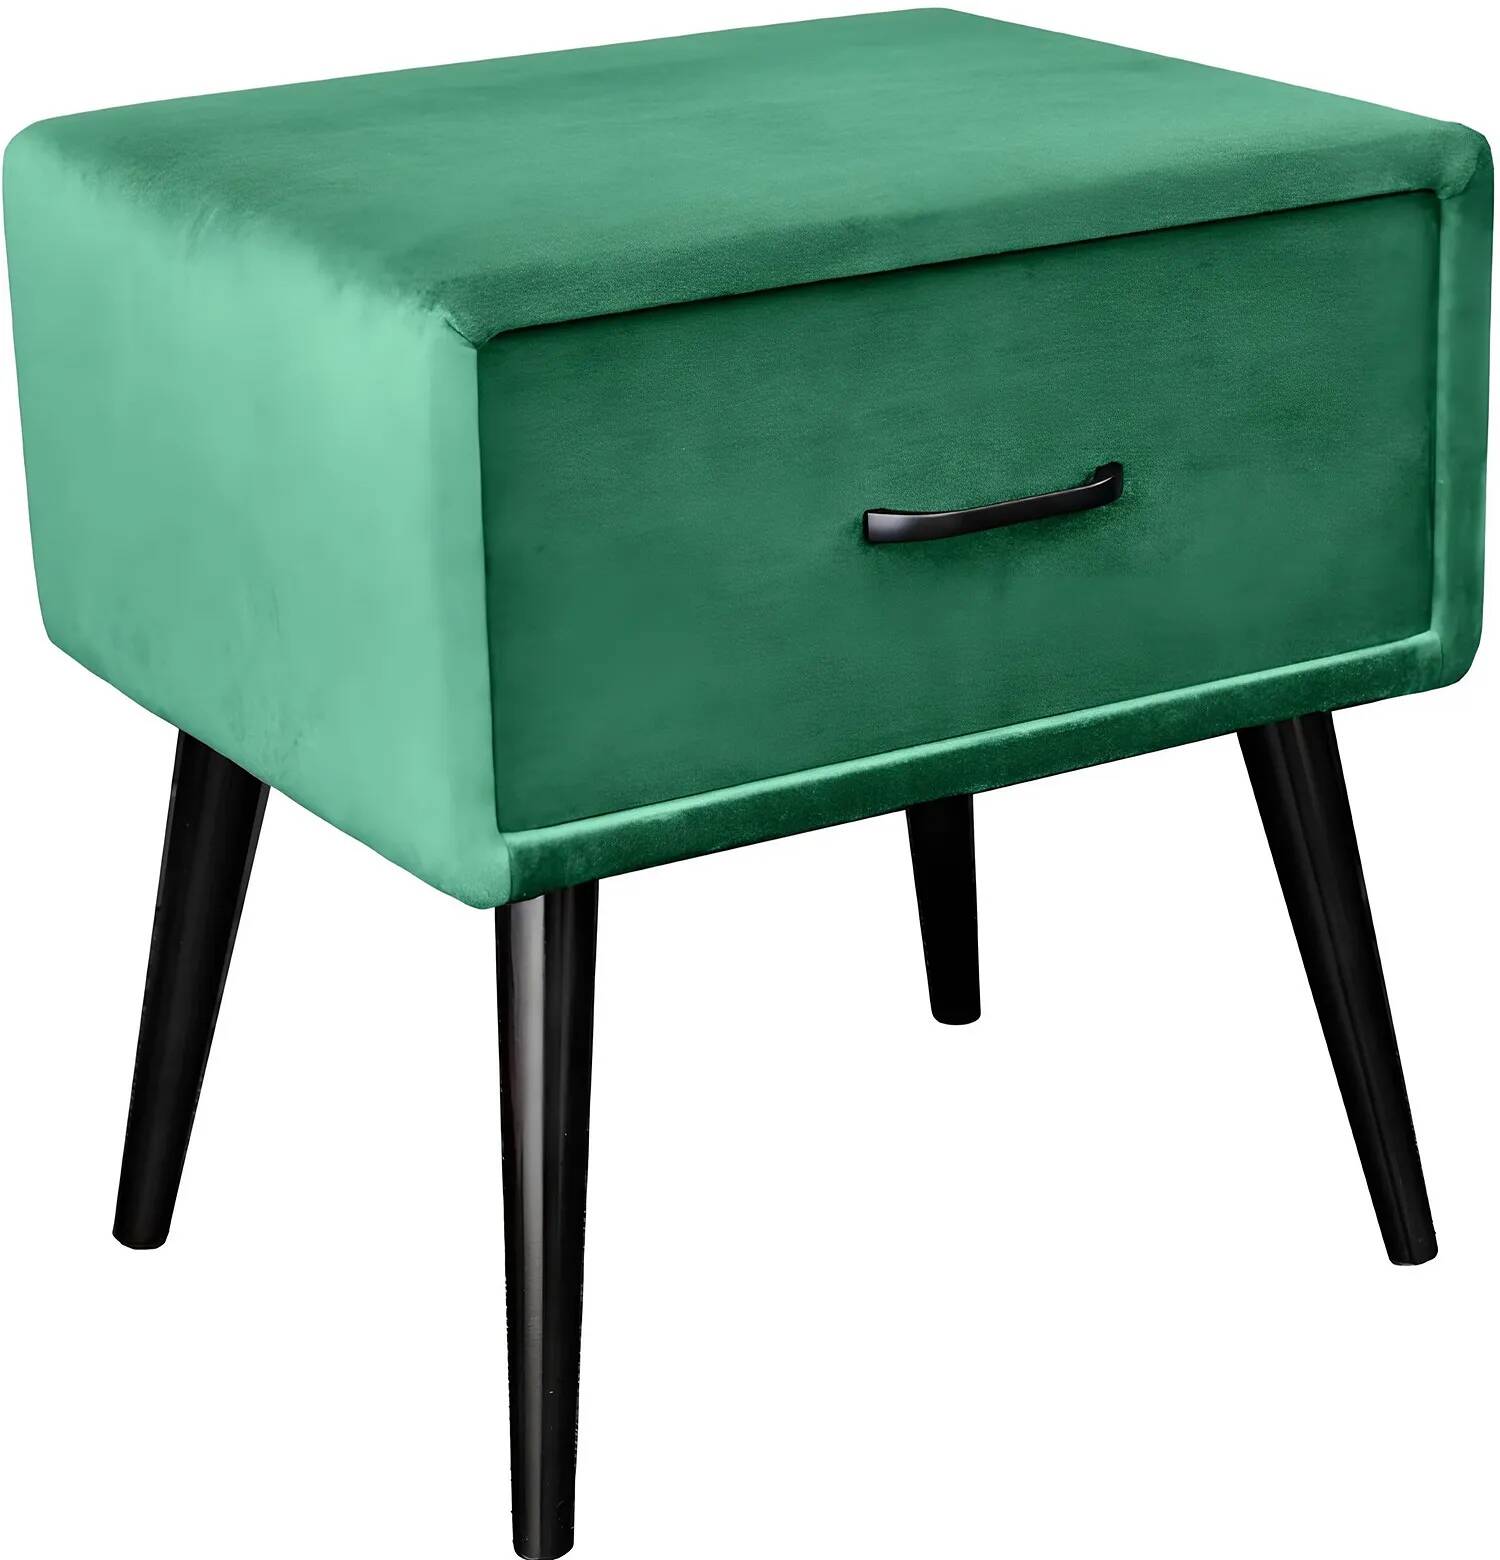 Table de chevet design en velours vert et métal noir 1 tiroir